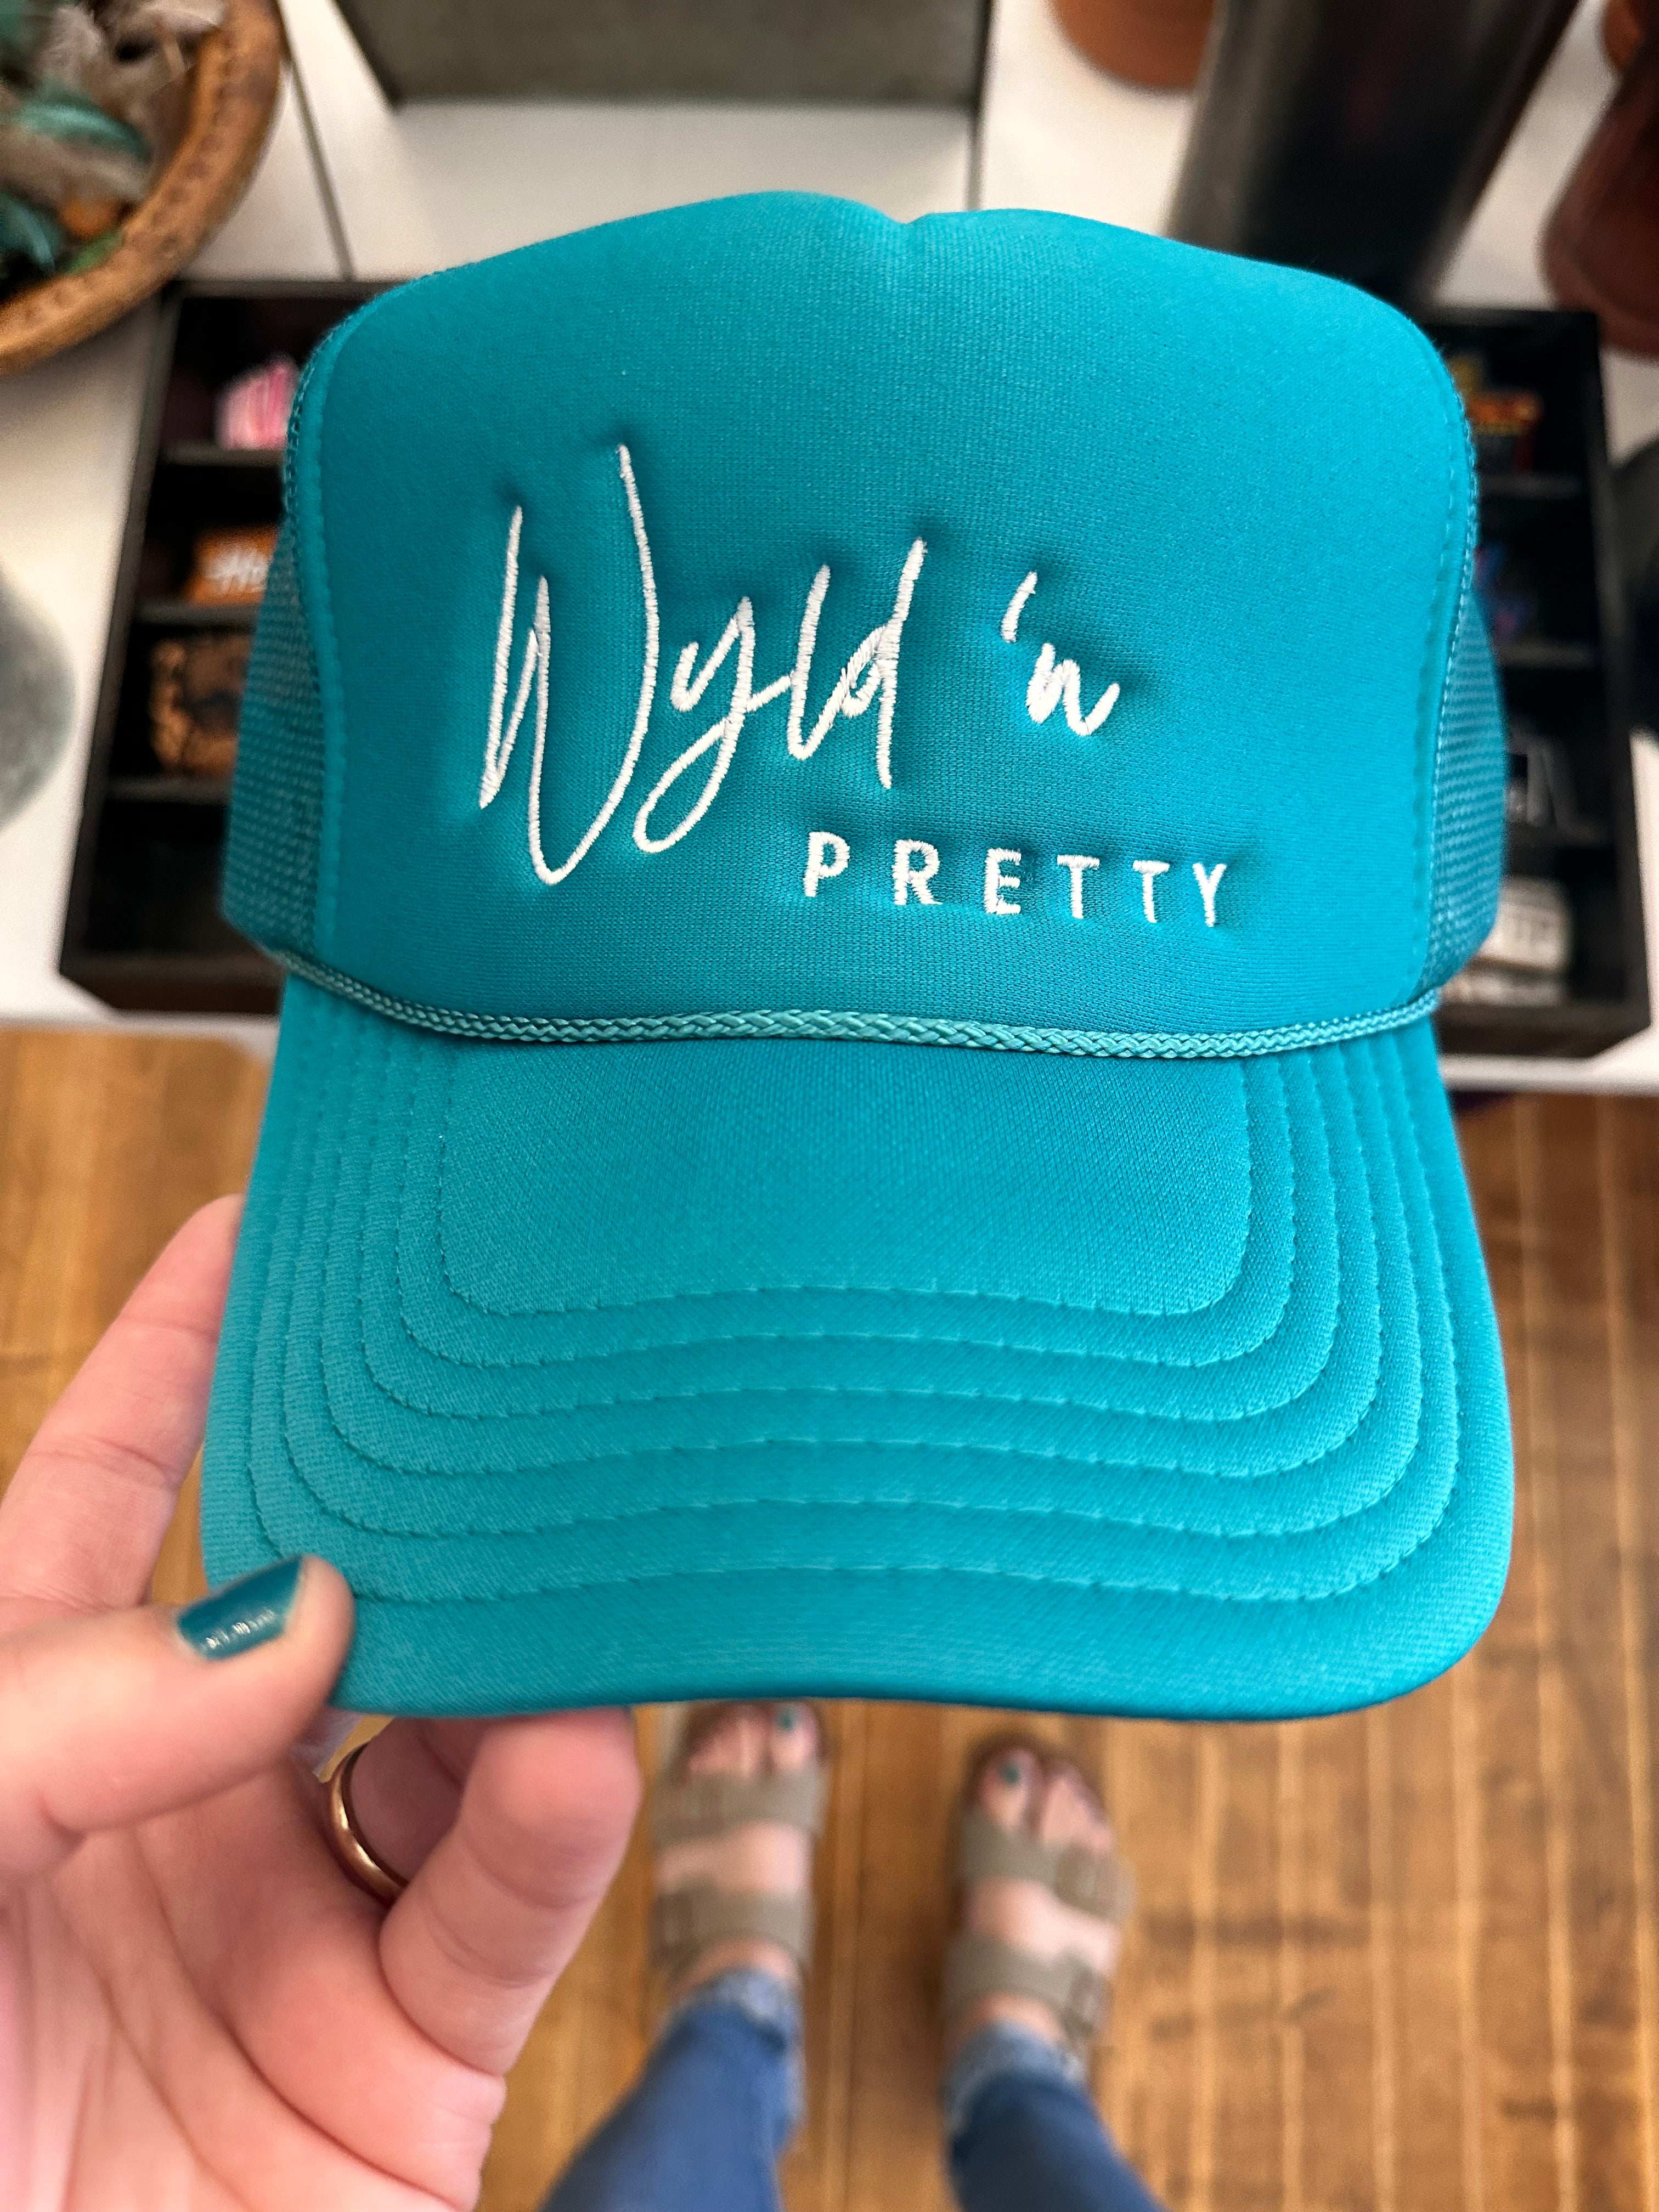 Wyld 'n Pretty Signature Trucker Hat